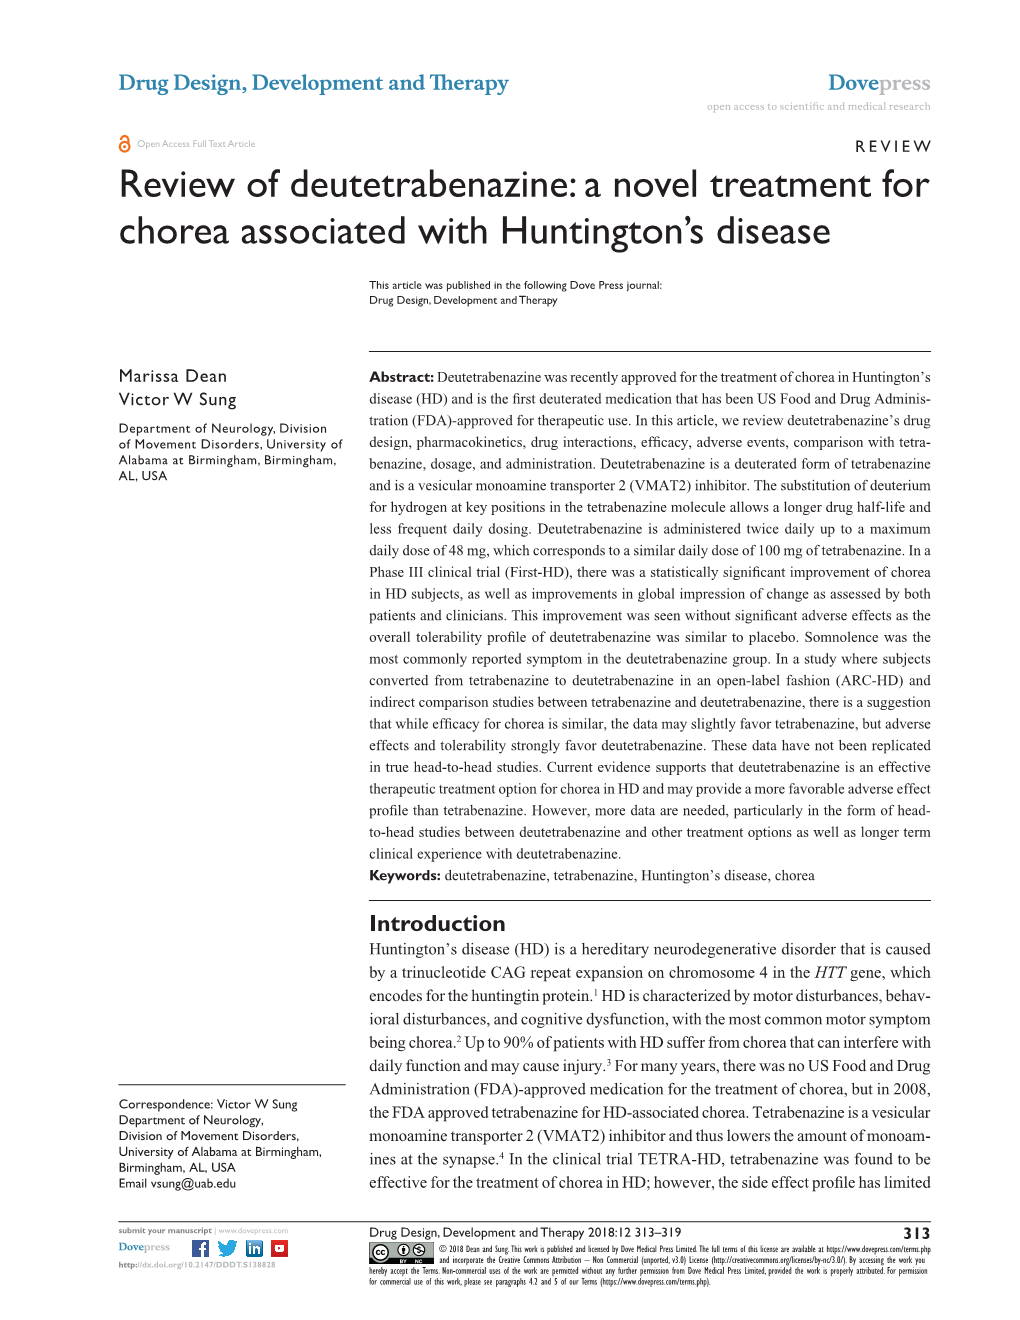 Review of Deutetrabenazine: a Novel Treatment for Chorea Associated with Huntington’S Disease